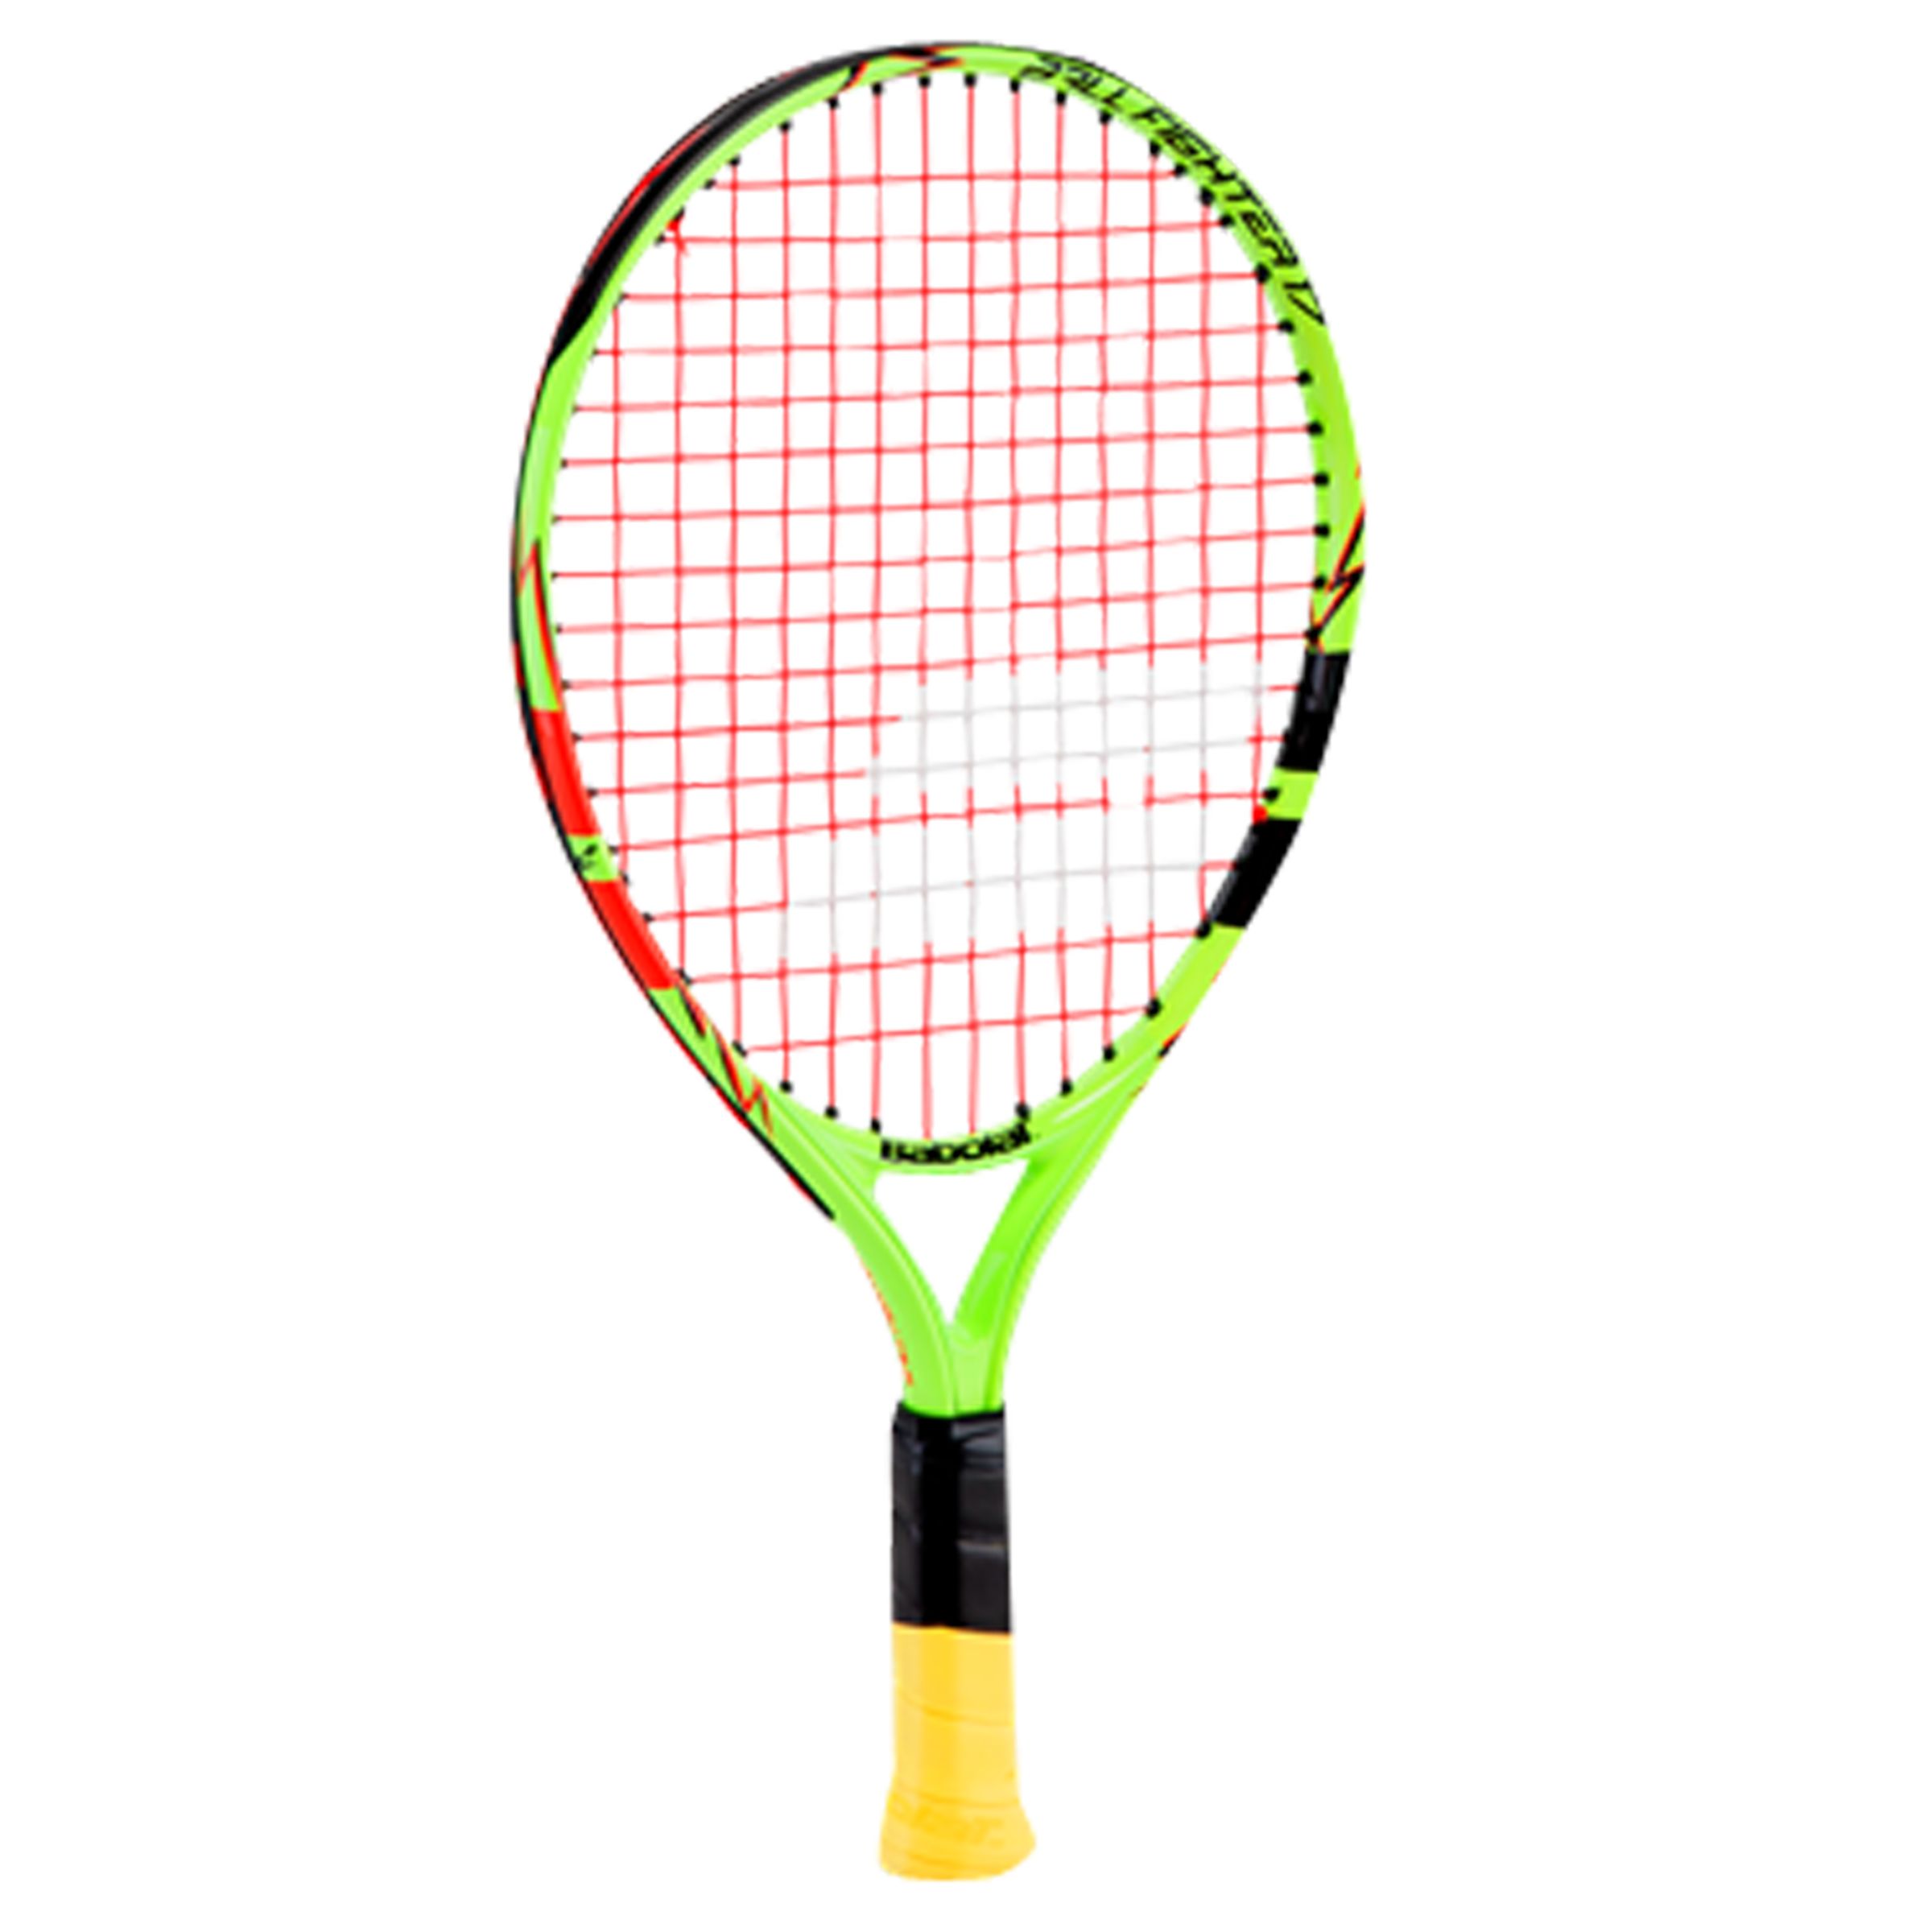 Babolat Ballfighter 17" Junior 3 - 5 Years Old Aluminium Tennis Racket, Green/Black